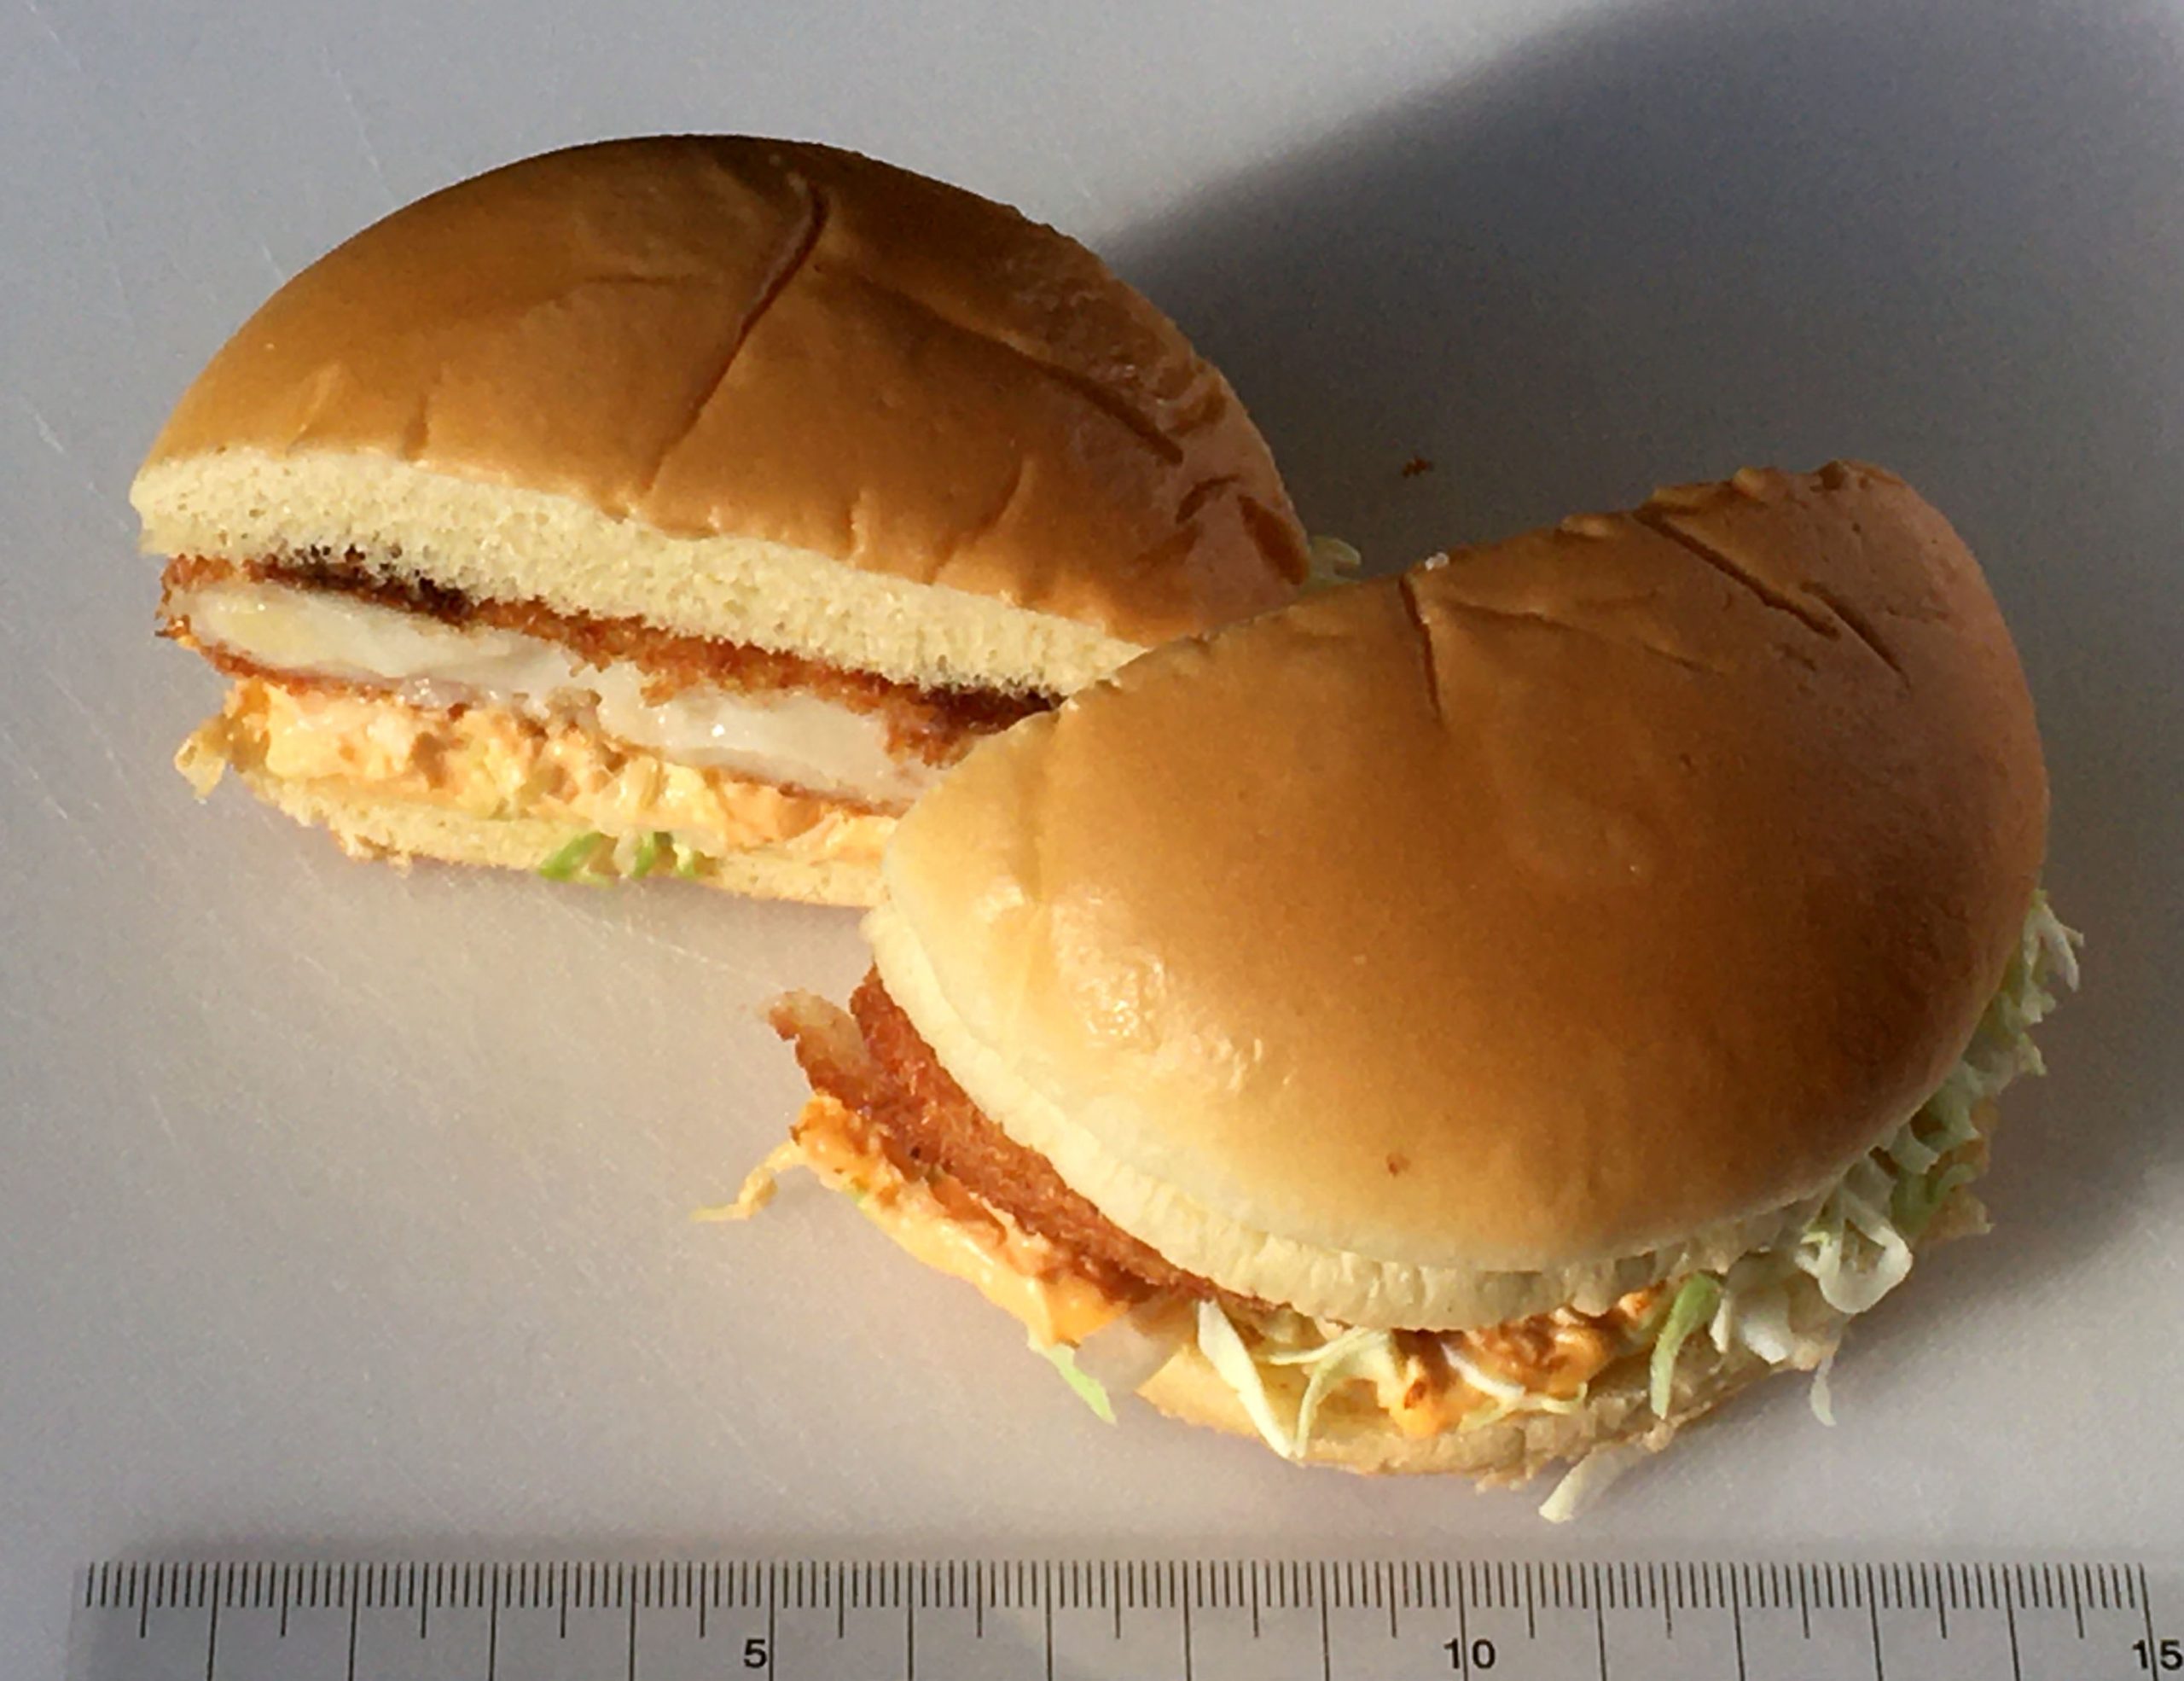 Close up photograph of a Mcdonald's sandwich. The sandwich has lettuce, macaroni, shrimp, and white sauce.